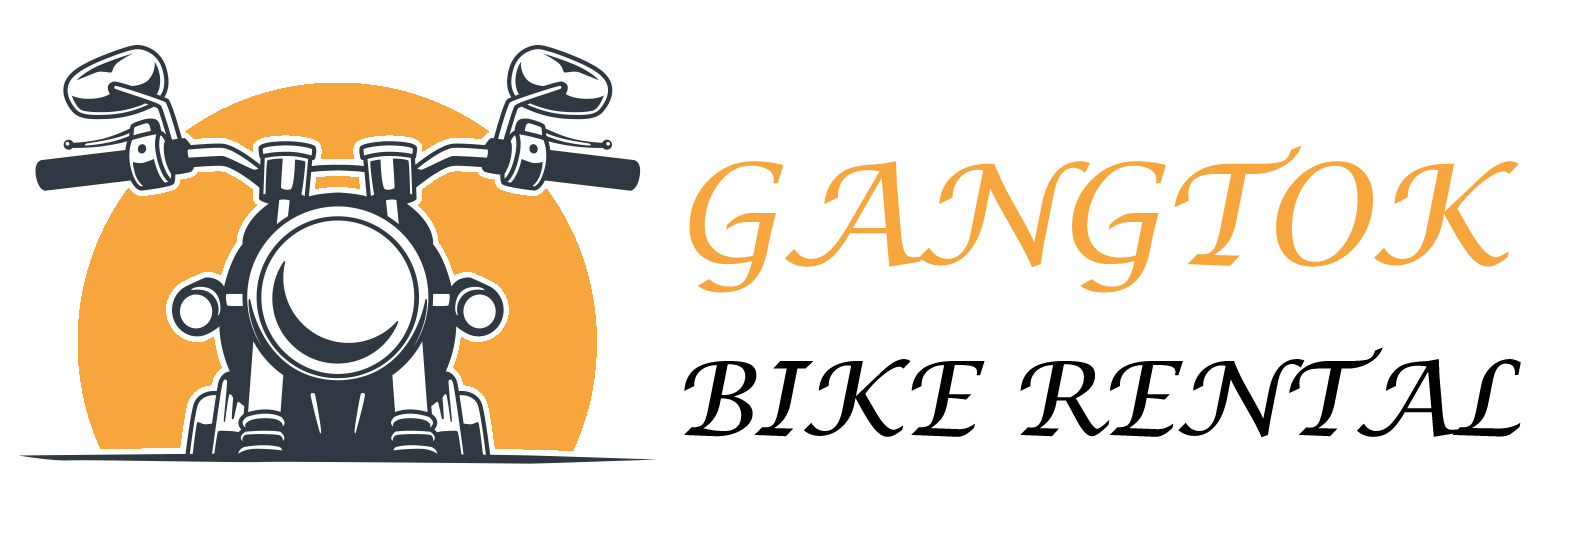 Gangtok Bike Rentals